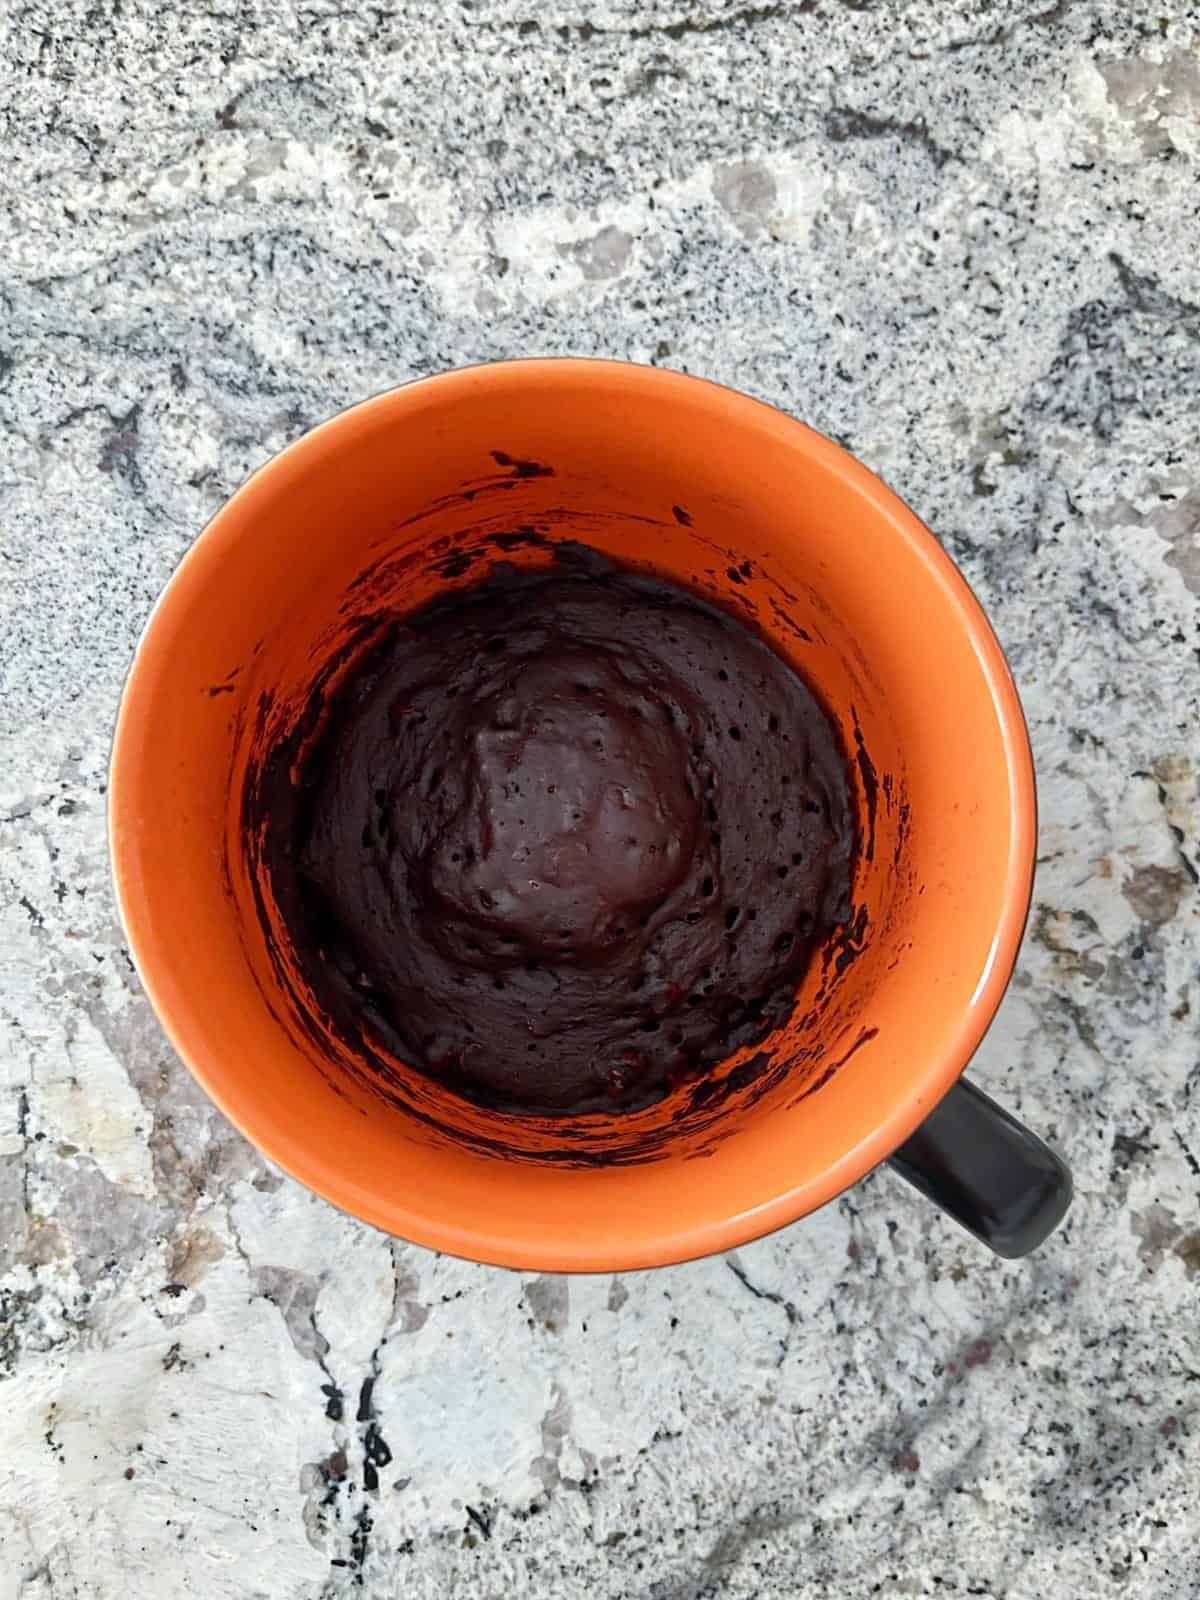 Microwave Black Forest Chocolate Cake in orange mug on granite counter.